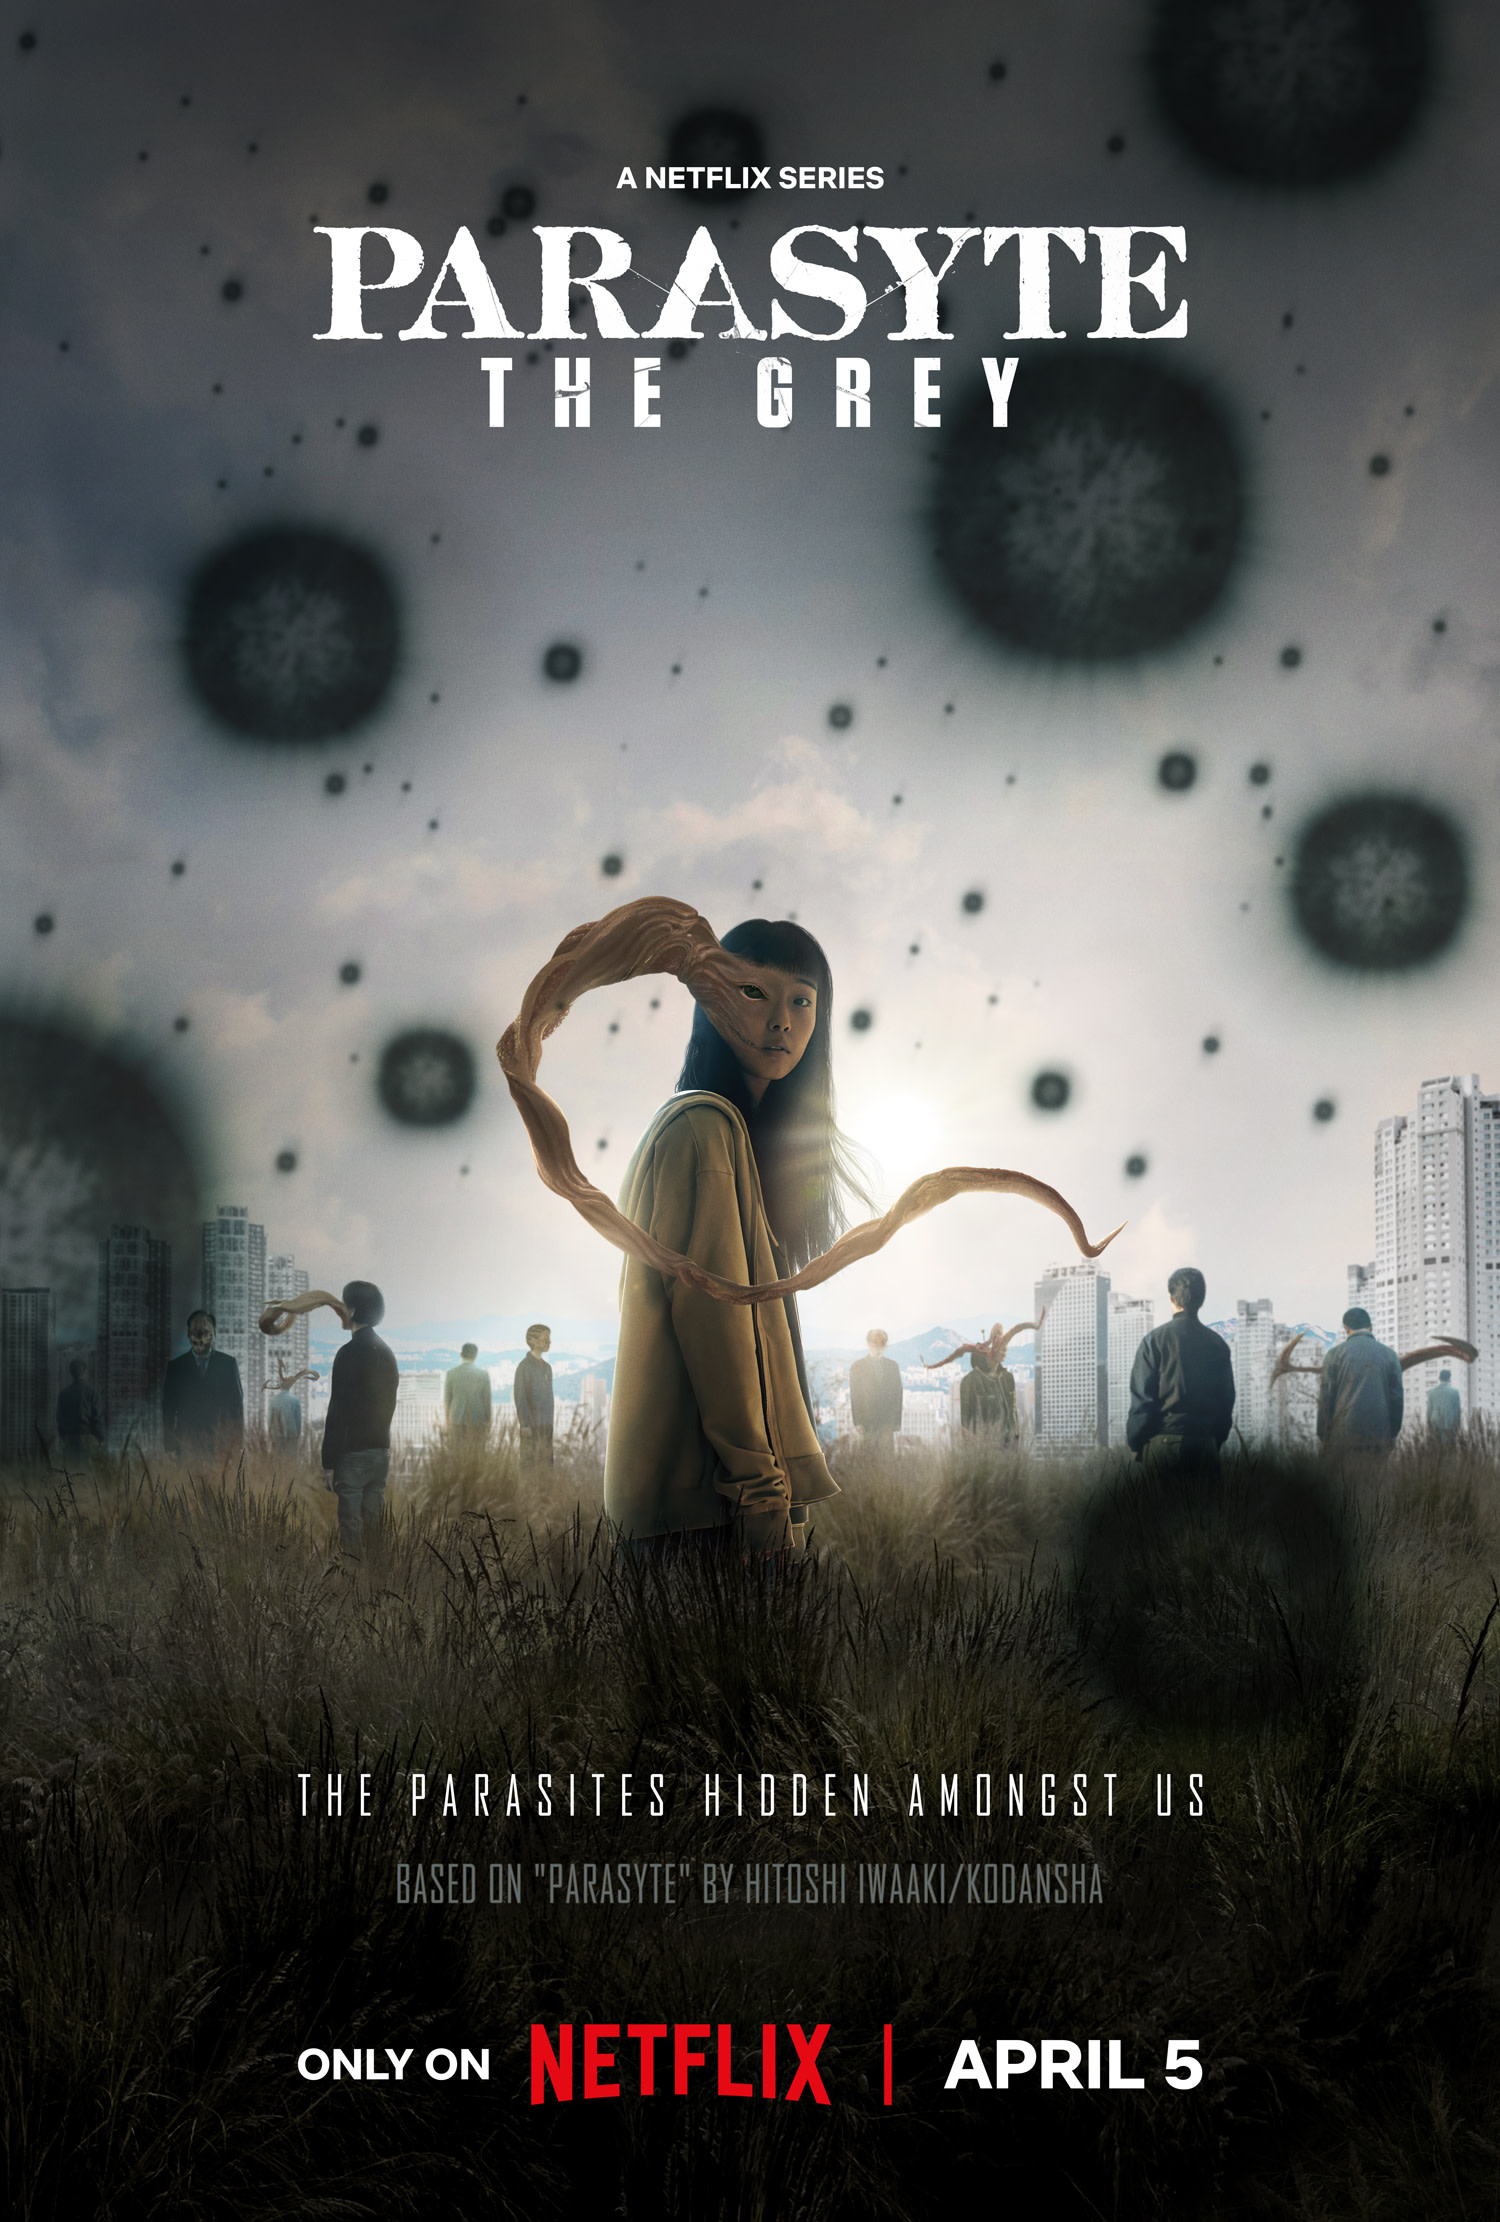 Hidden Among Humans: ‘Parasyte: The Grey’ Premieres April 5